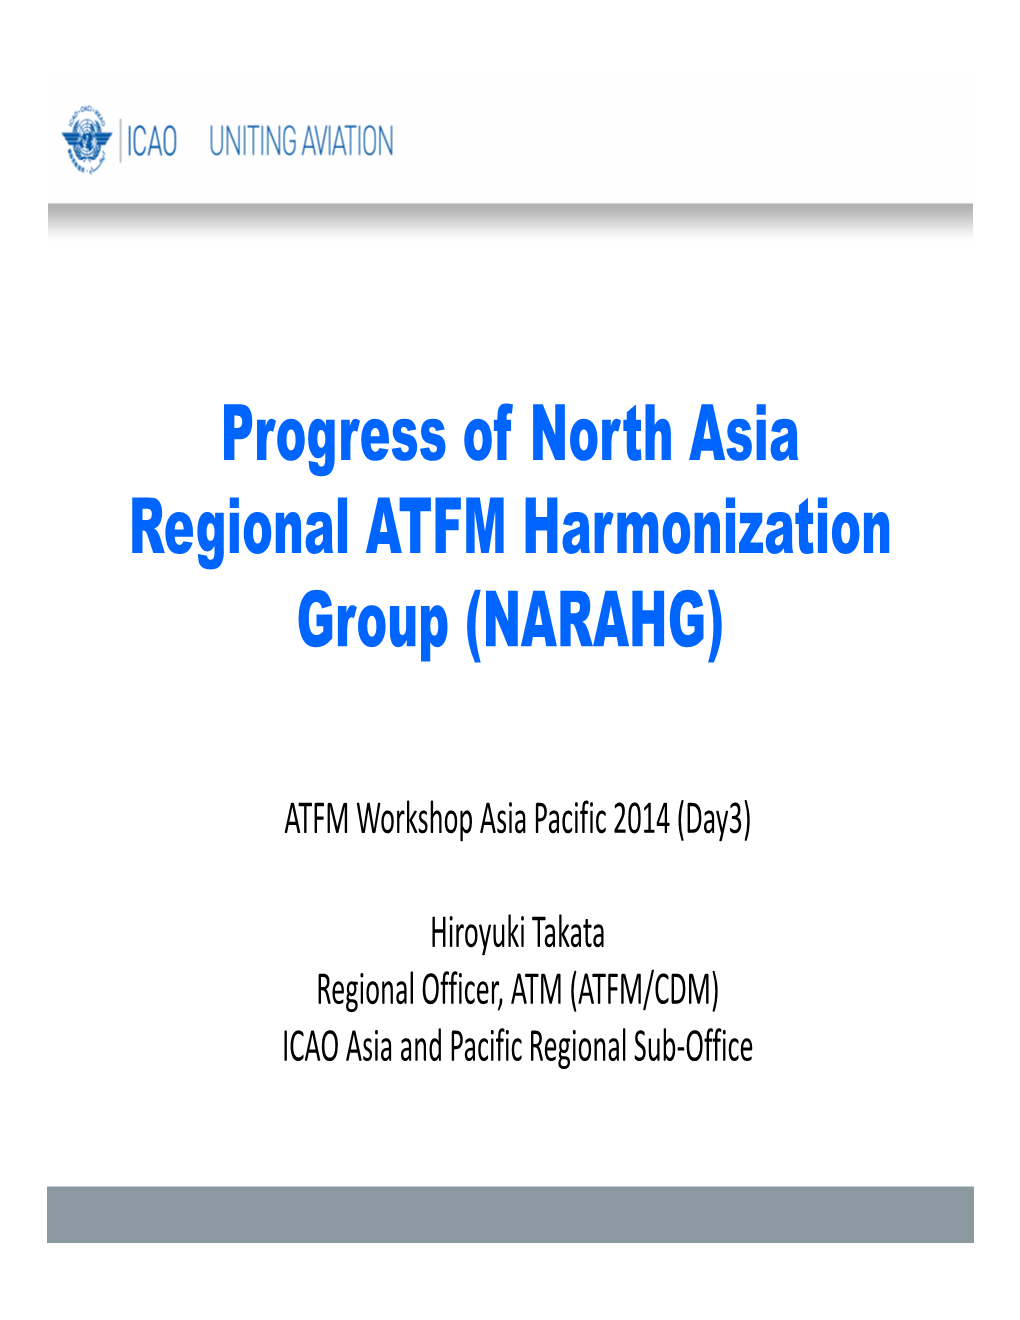 Progress of North Asia Regional ATFM Harmonization Group (NARAHG)